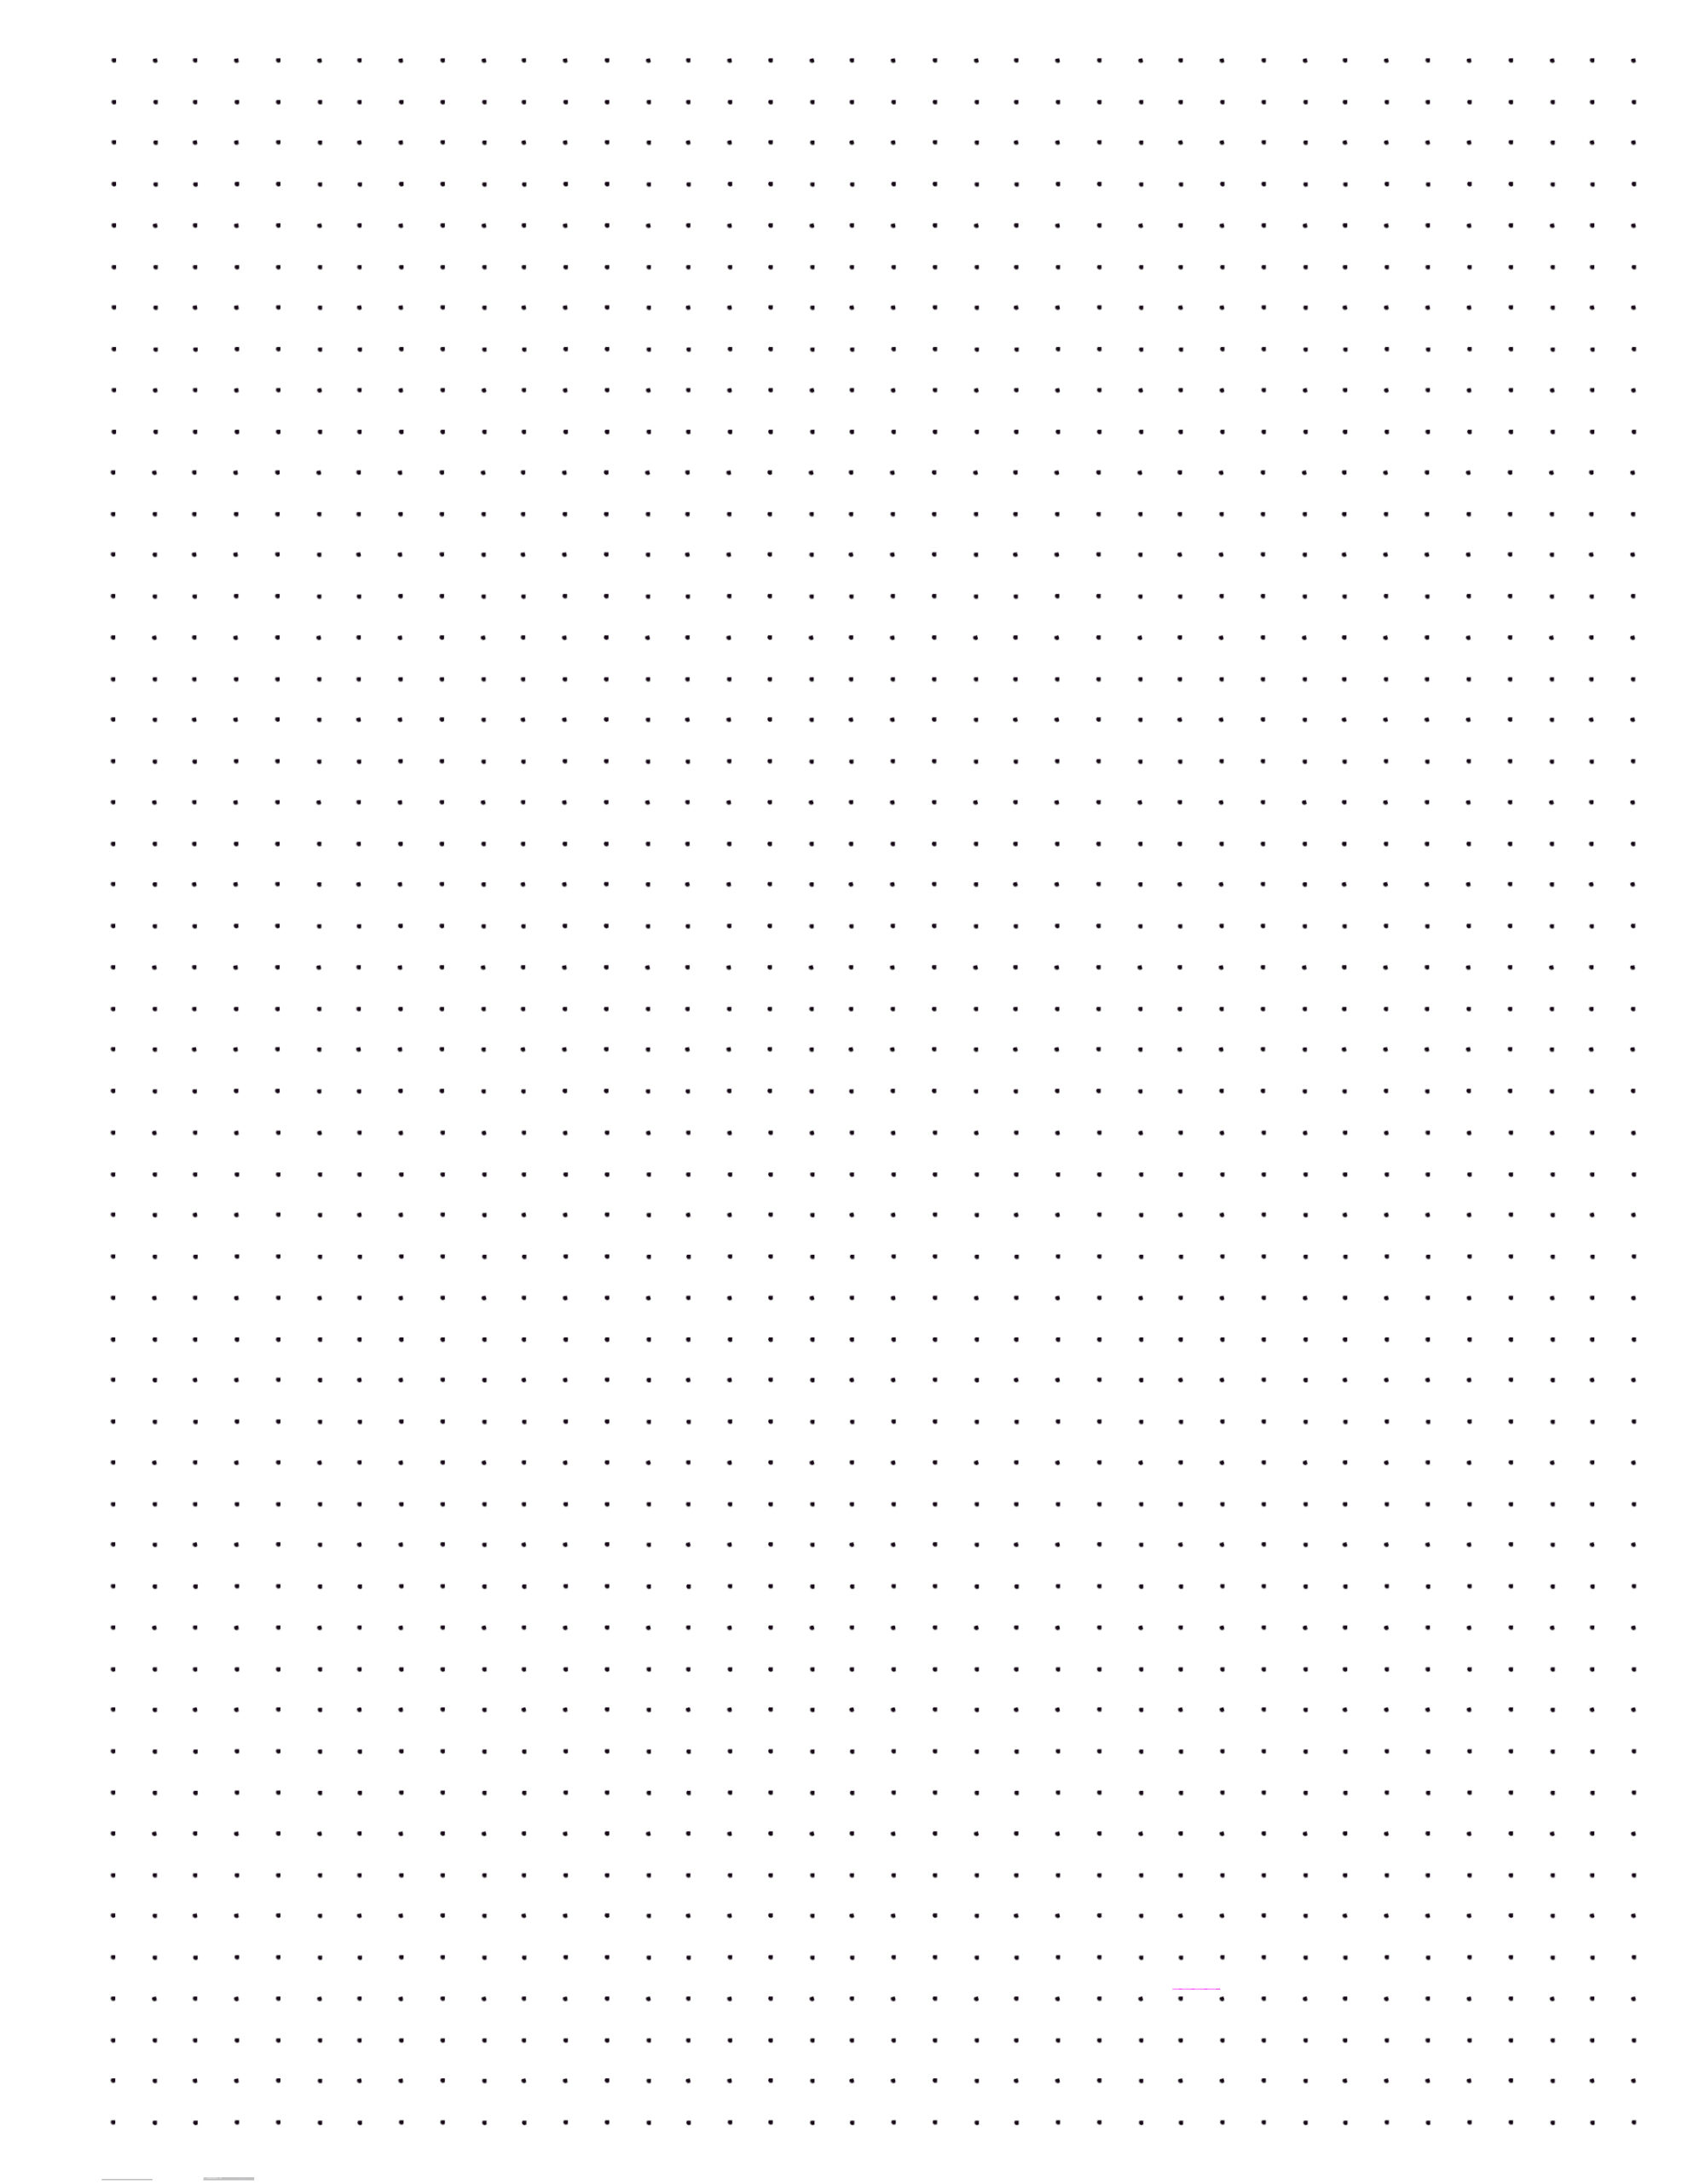 happy planner dot grid paper free printable paper trail design